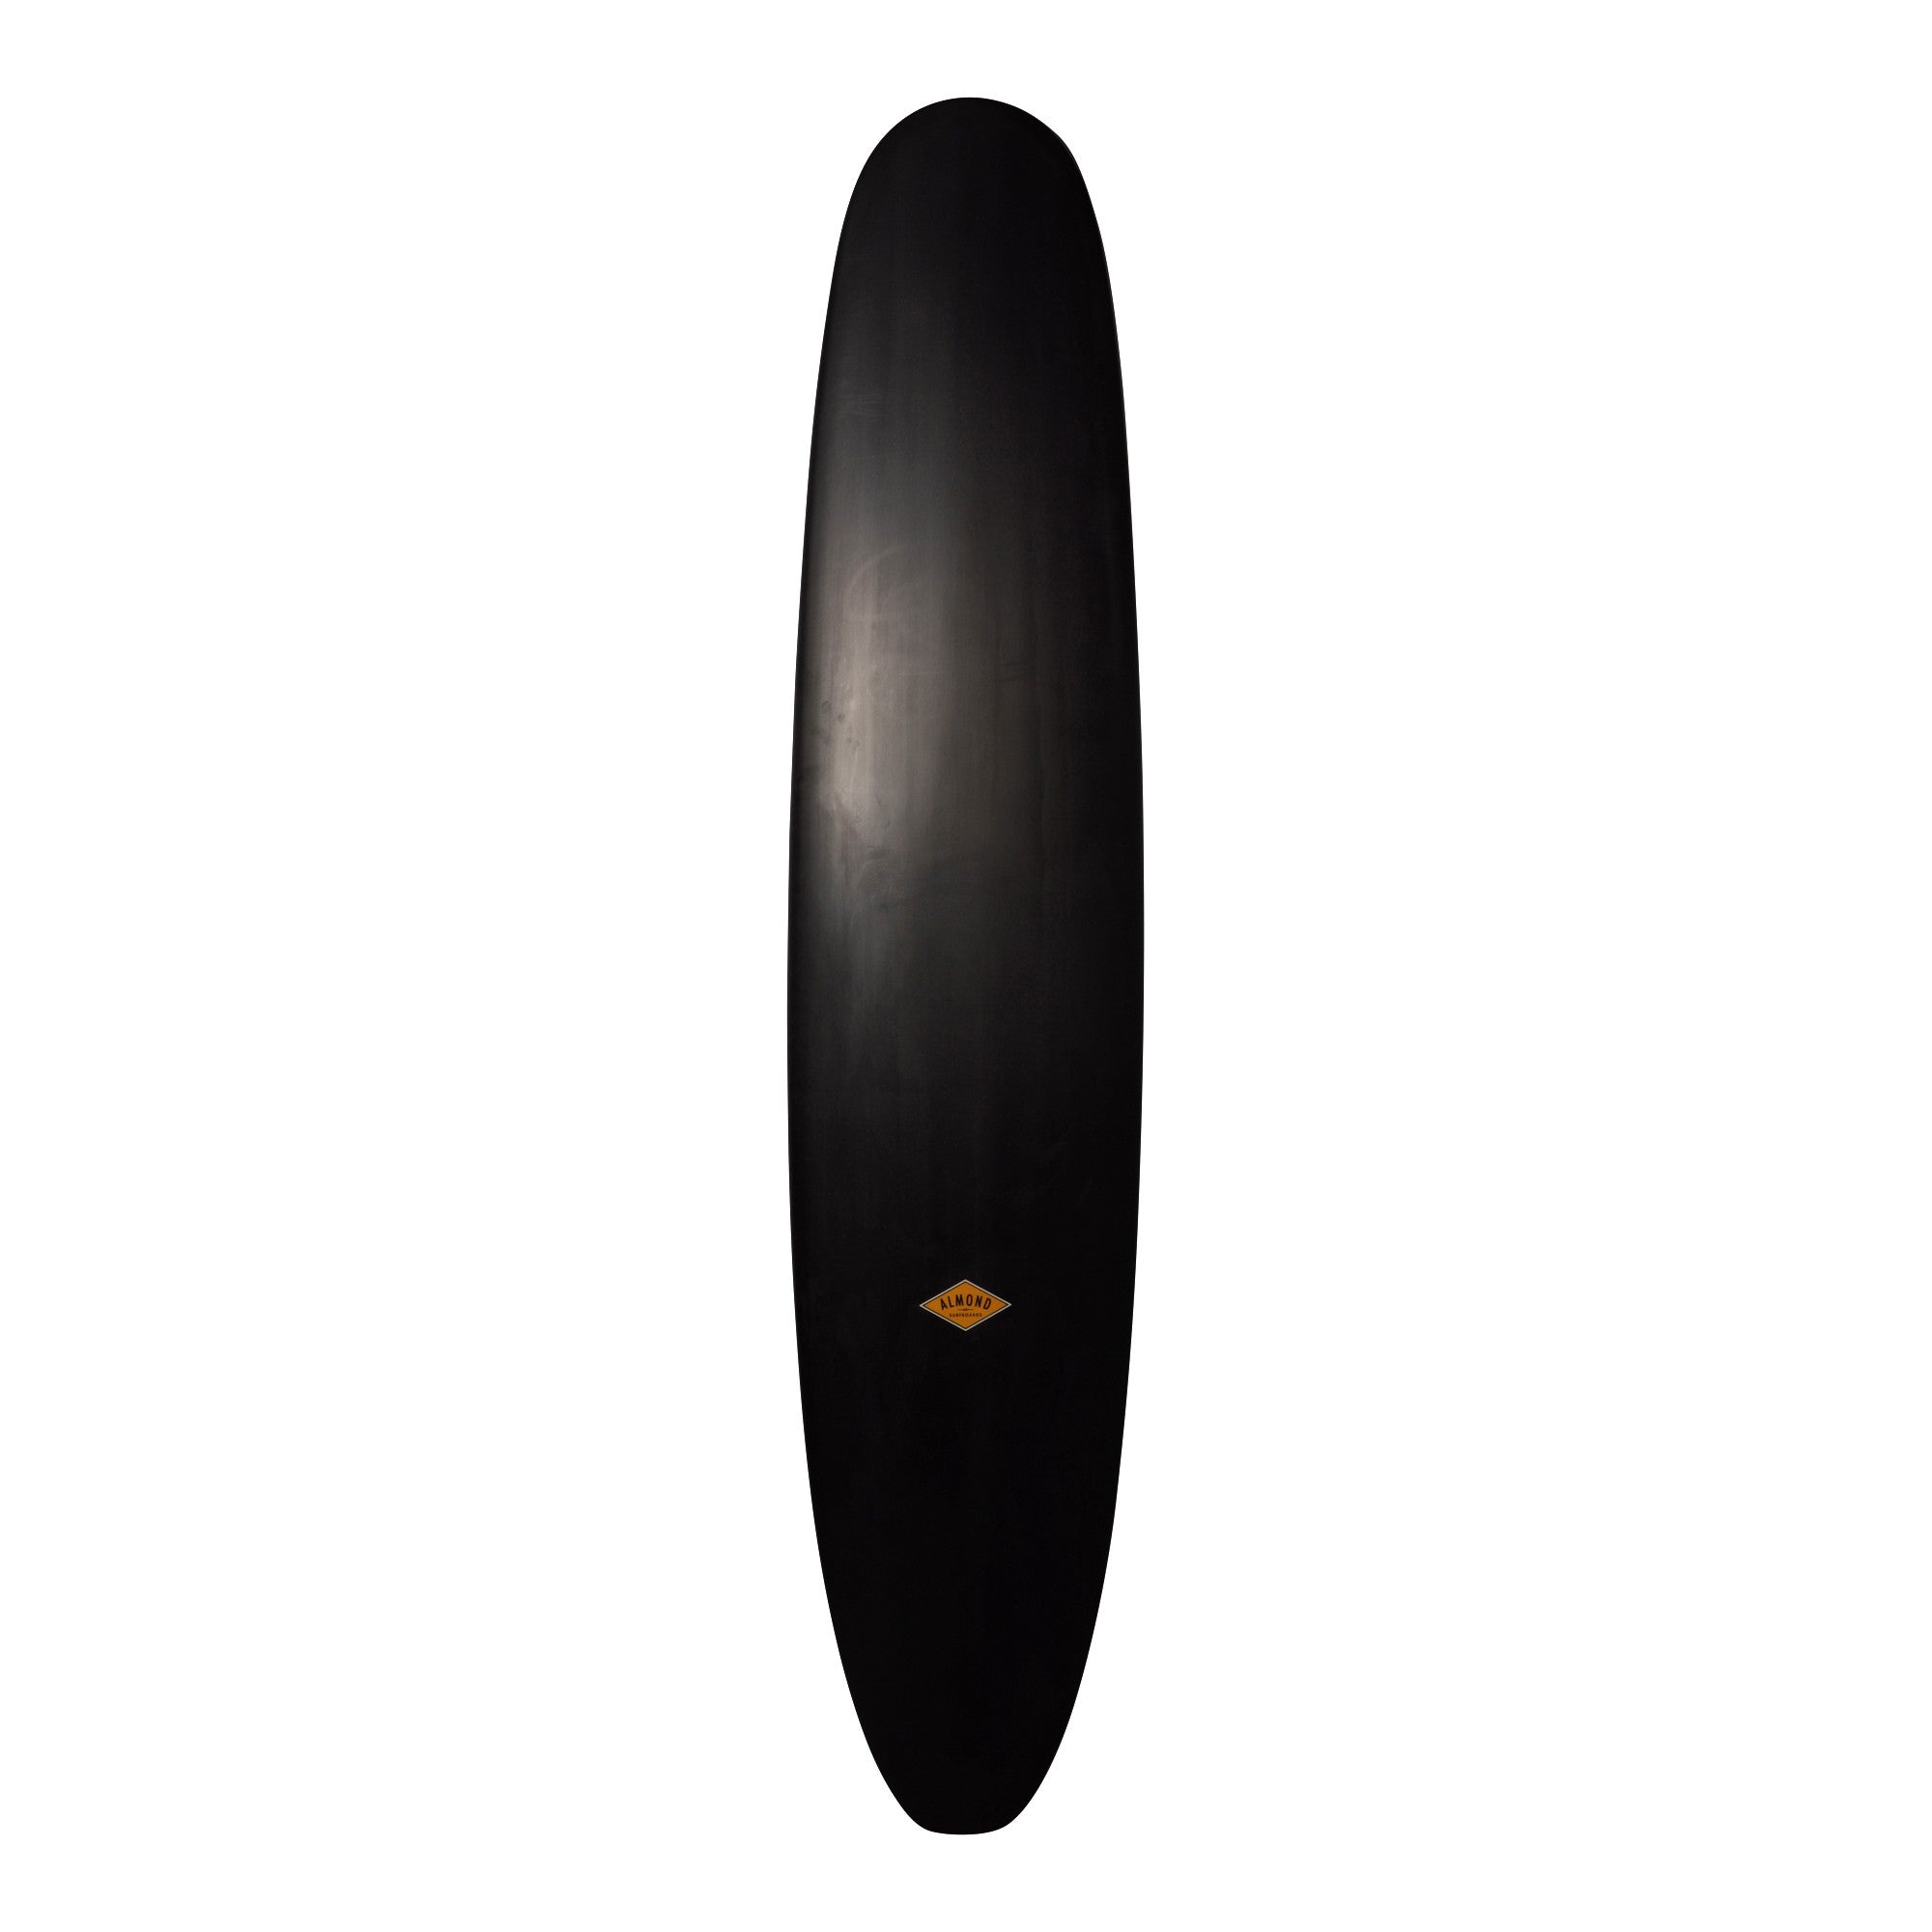 ALMOND Surf Thump 9'0 (PU) Longboard - Dark Navy